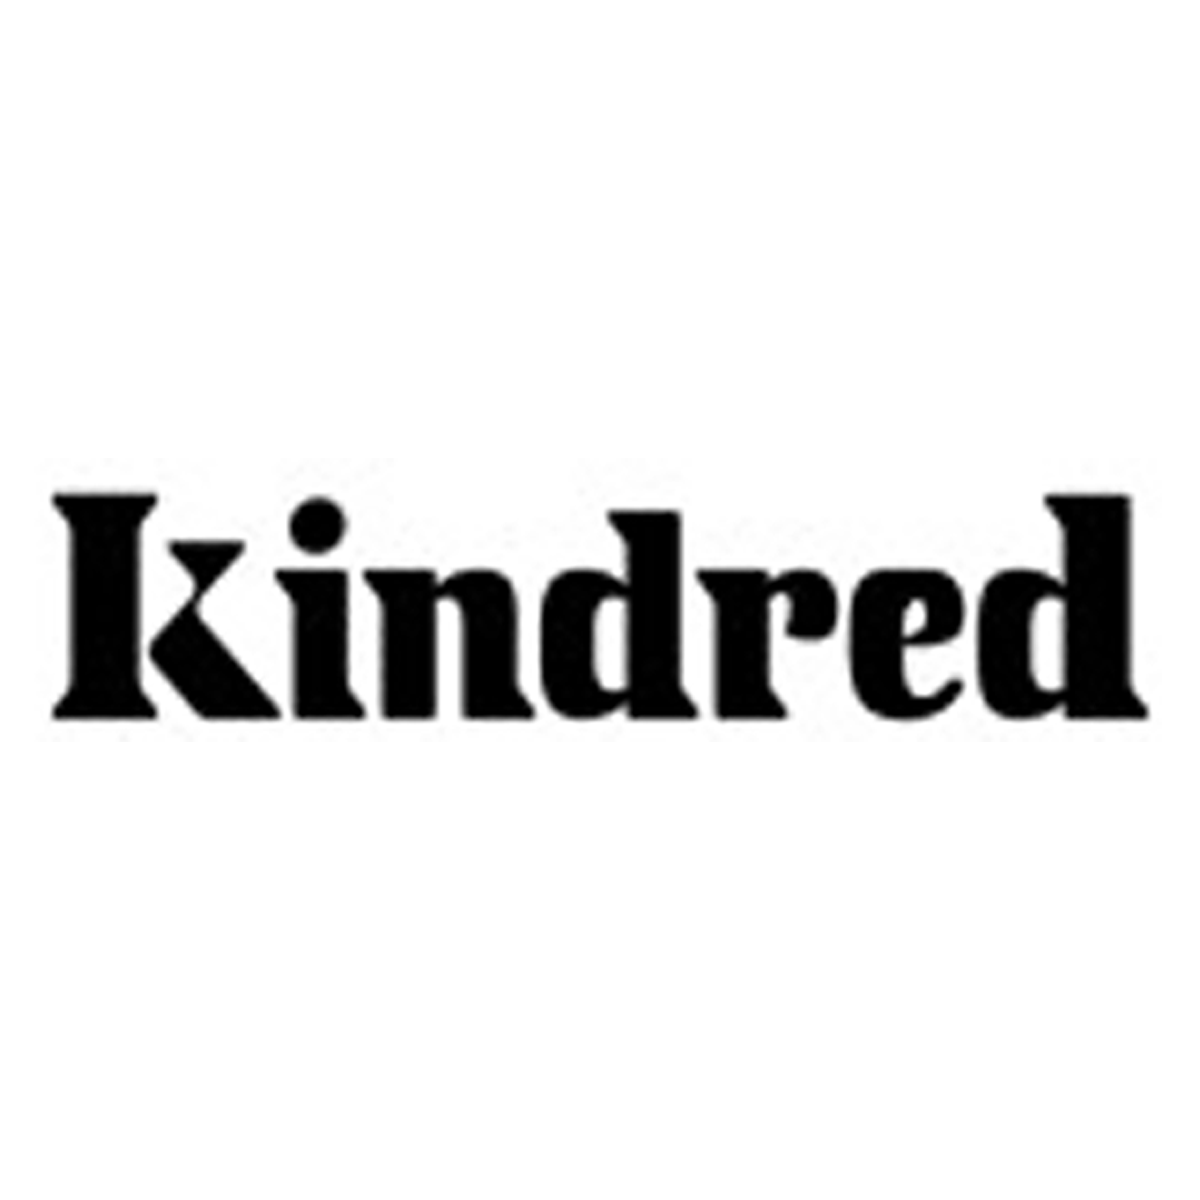 kindred-logo-square